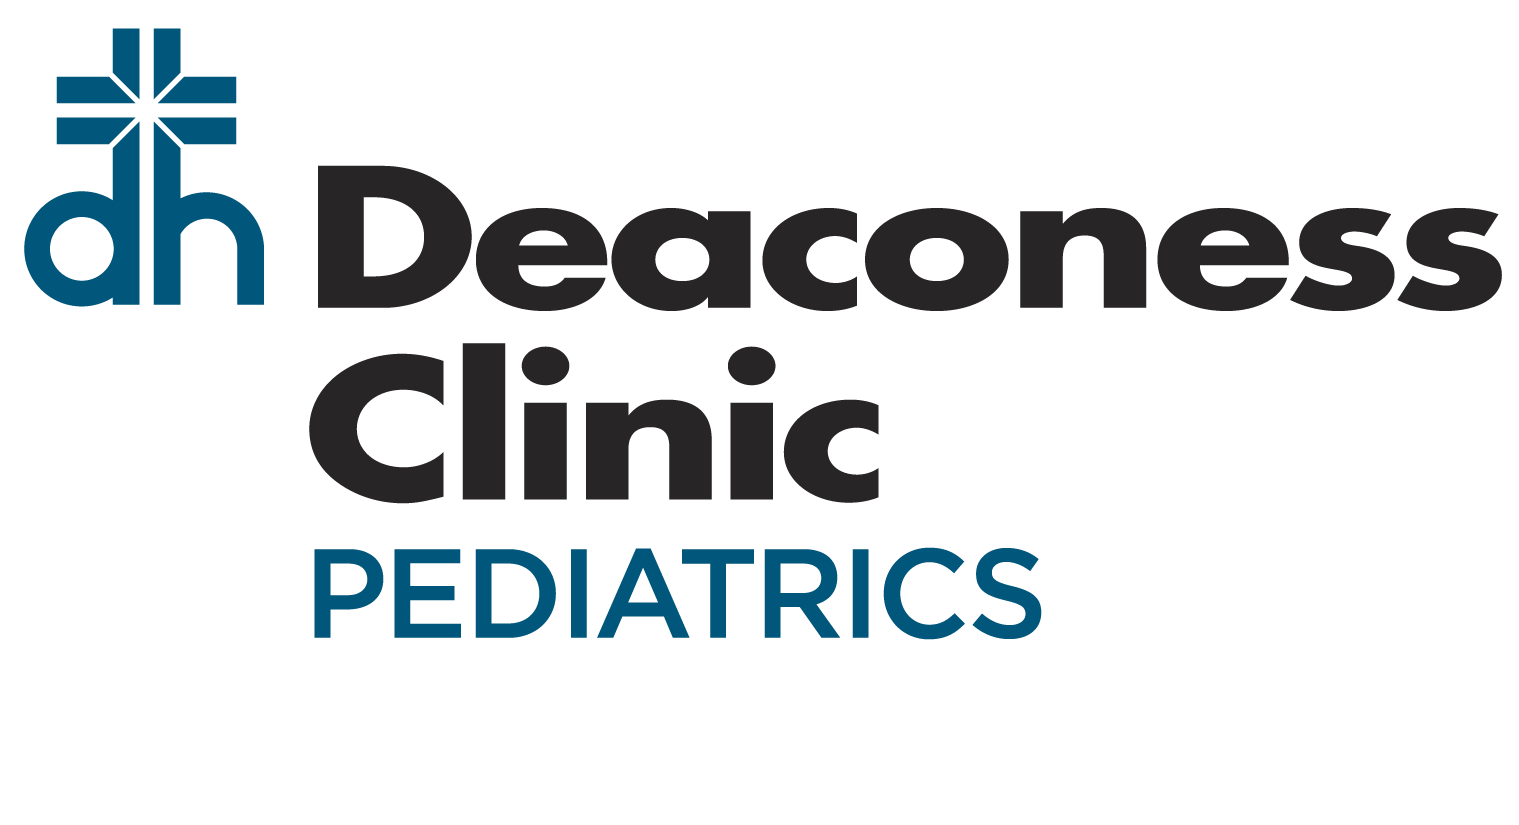 Deaconess Clinic Pediatrics